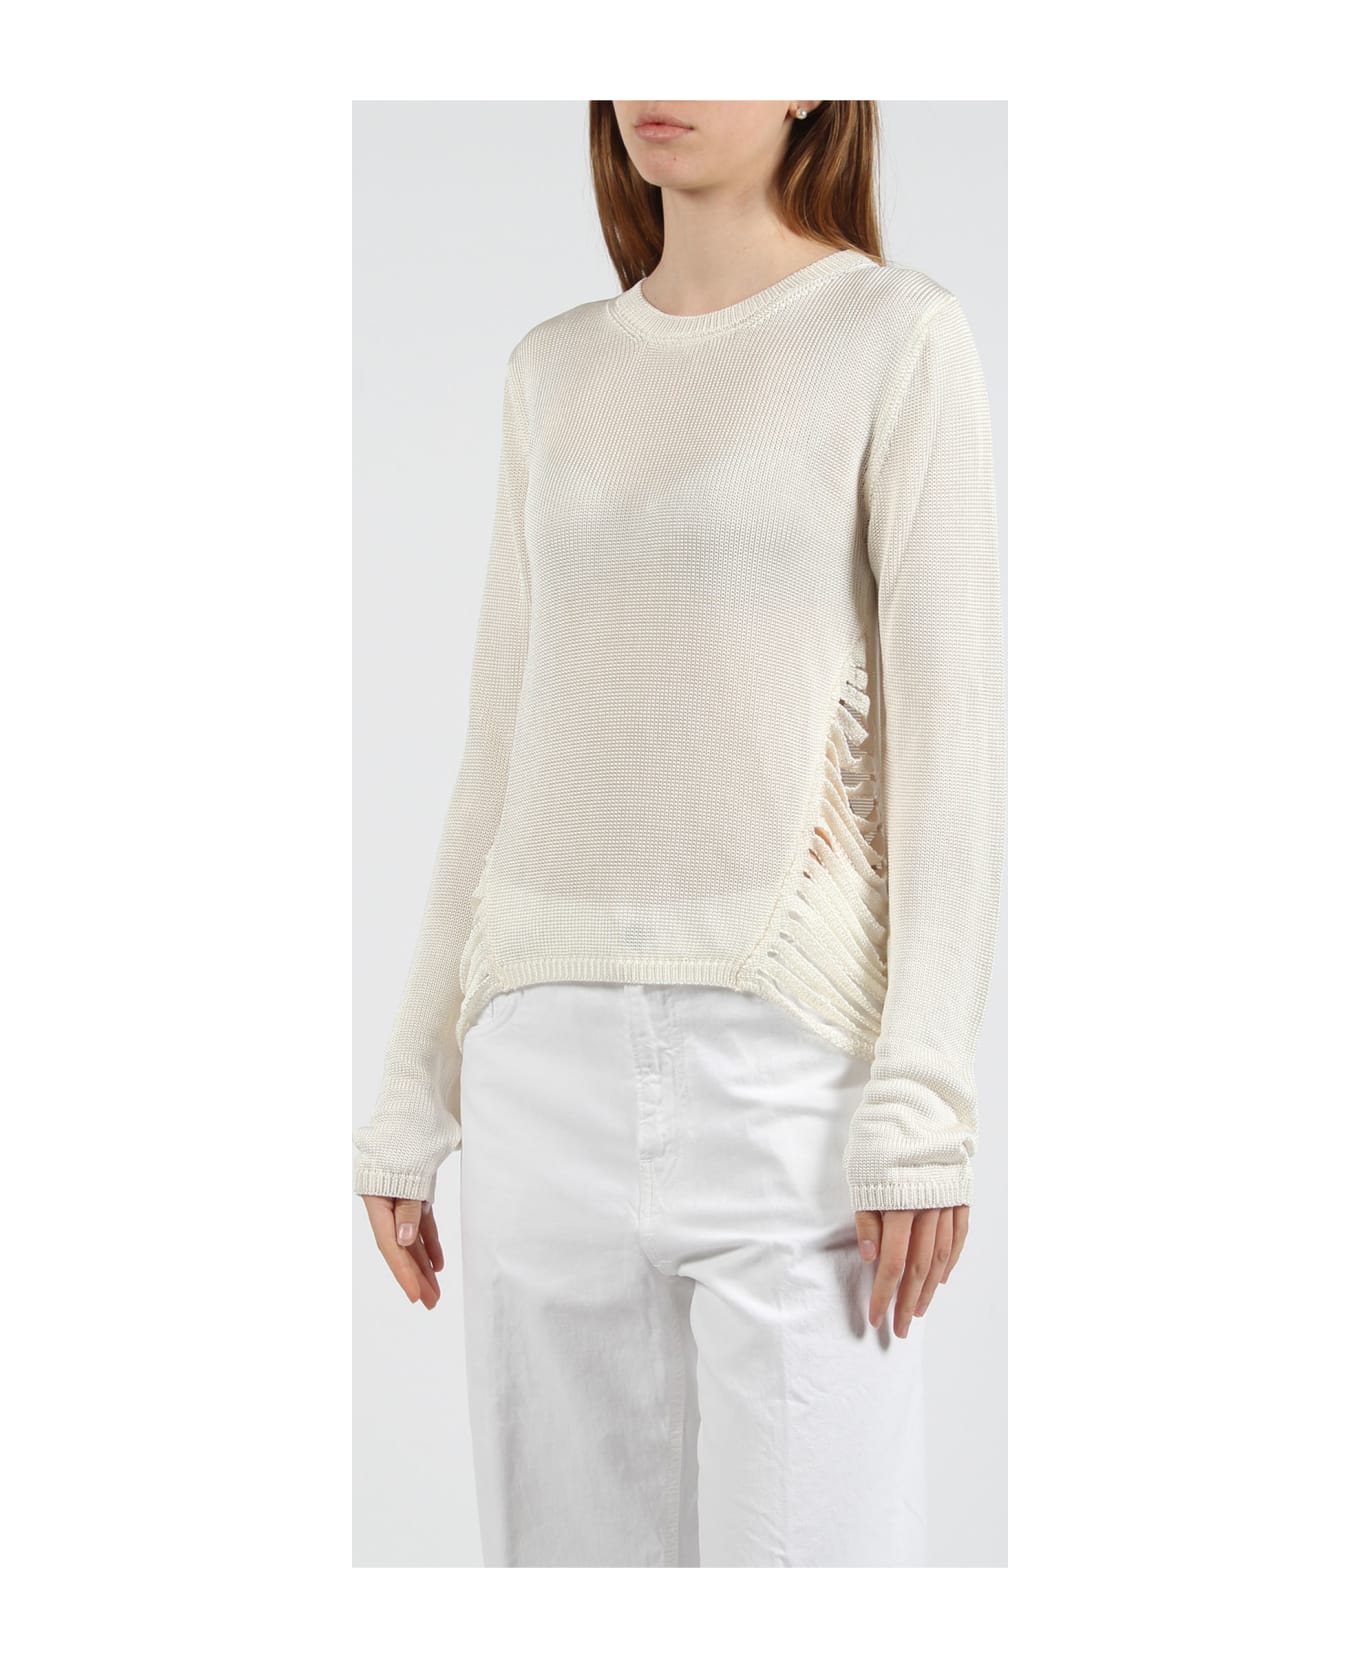 Atomo Factory Fringed Viscose Knit Sweater - White